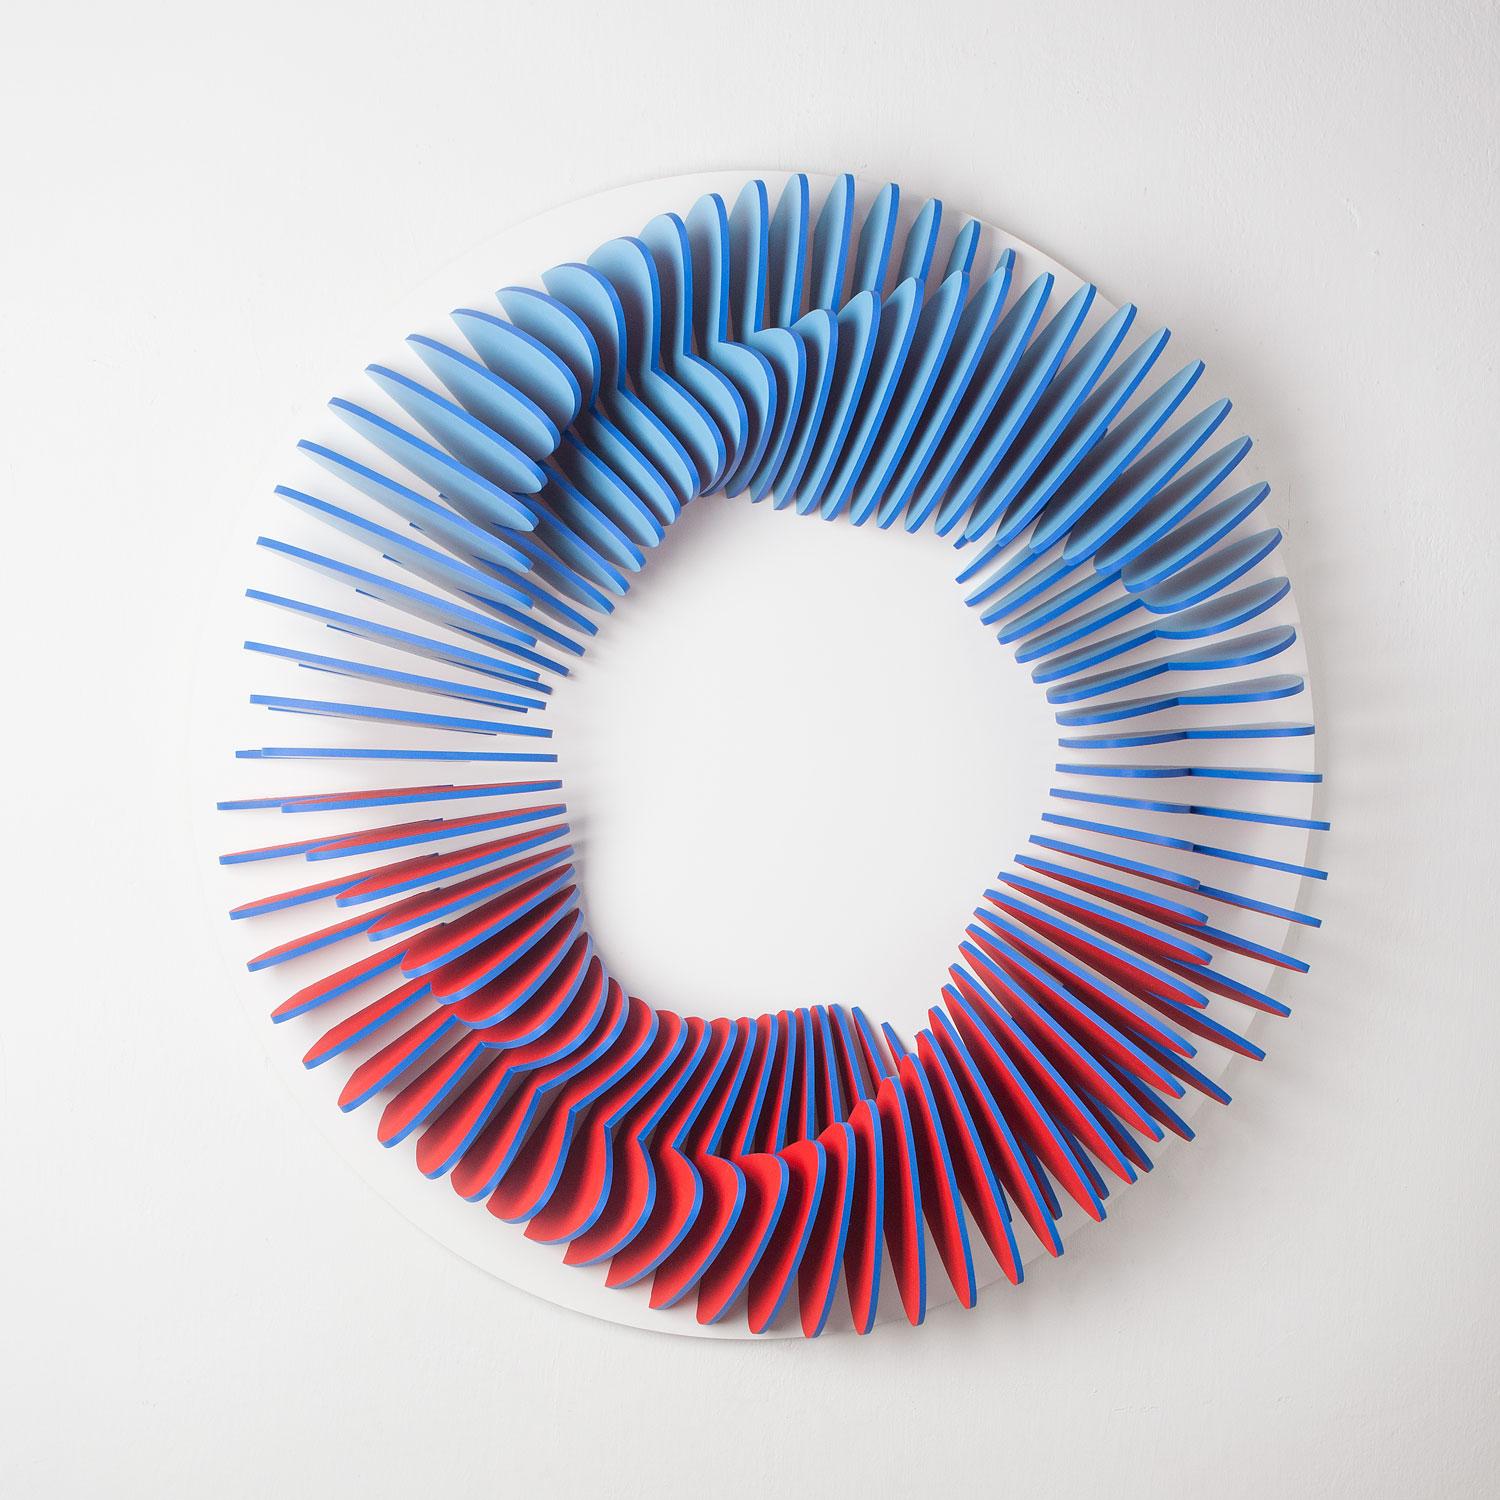 CC 100 - Blau-rote abstrakte geometrische 3D-Wandskulptur, kreisförmige Skulptur (Geometrische Abstraktion), Mixed Media Art, von Anna Kruhelska